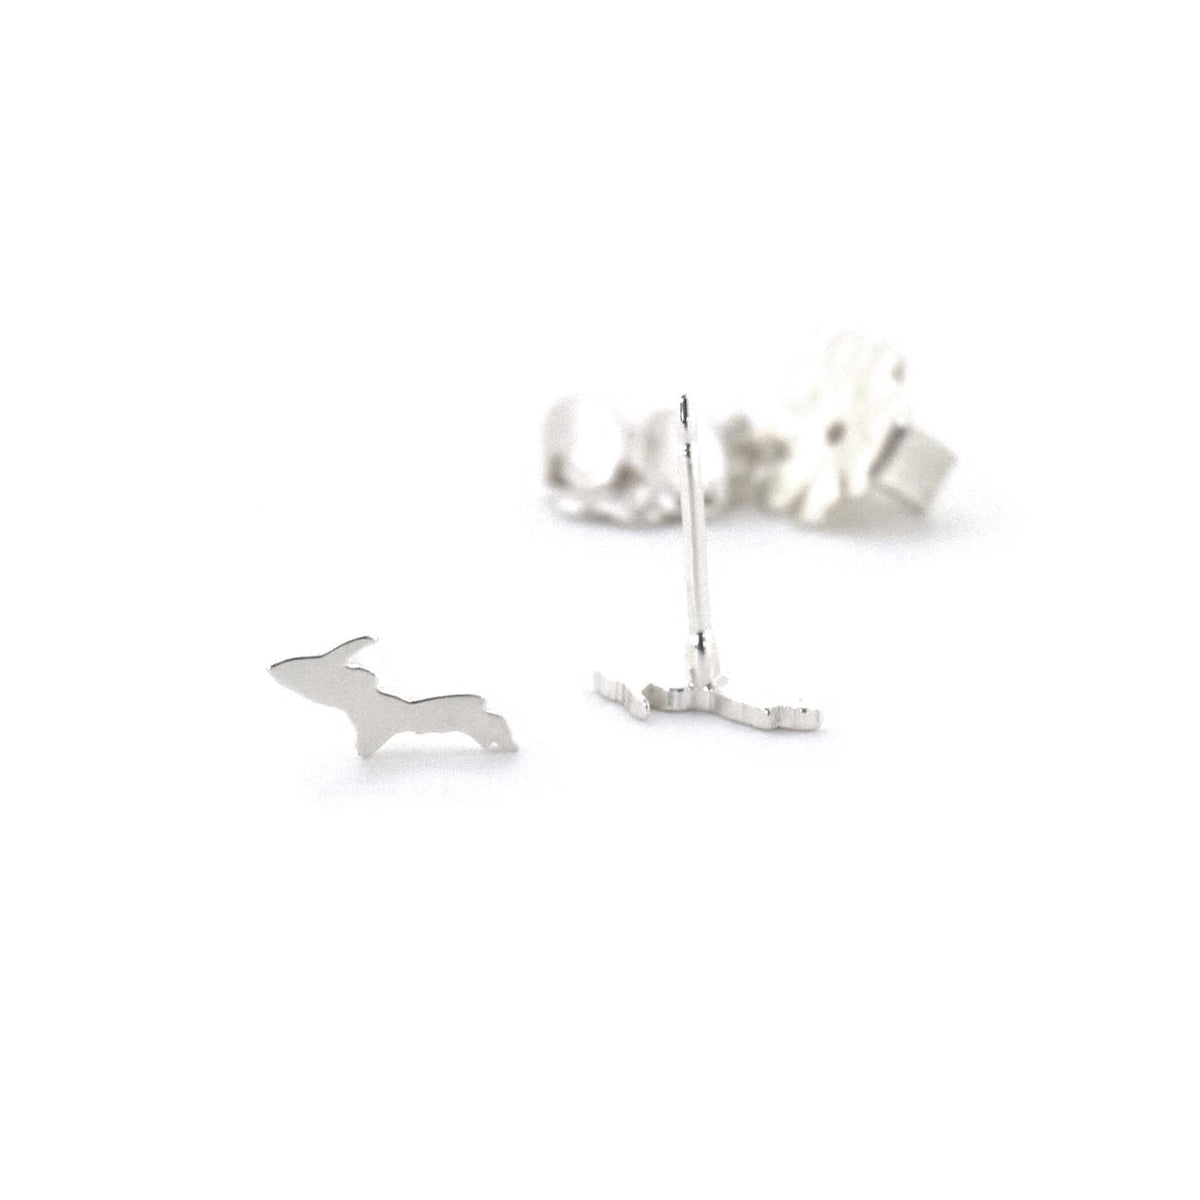 Tiny Upper Peninsula of Michigan Sterling Silver Post Earrings - Silver Earrings   1110 - handmade by Beth Millner Jewelry